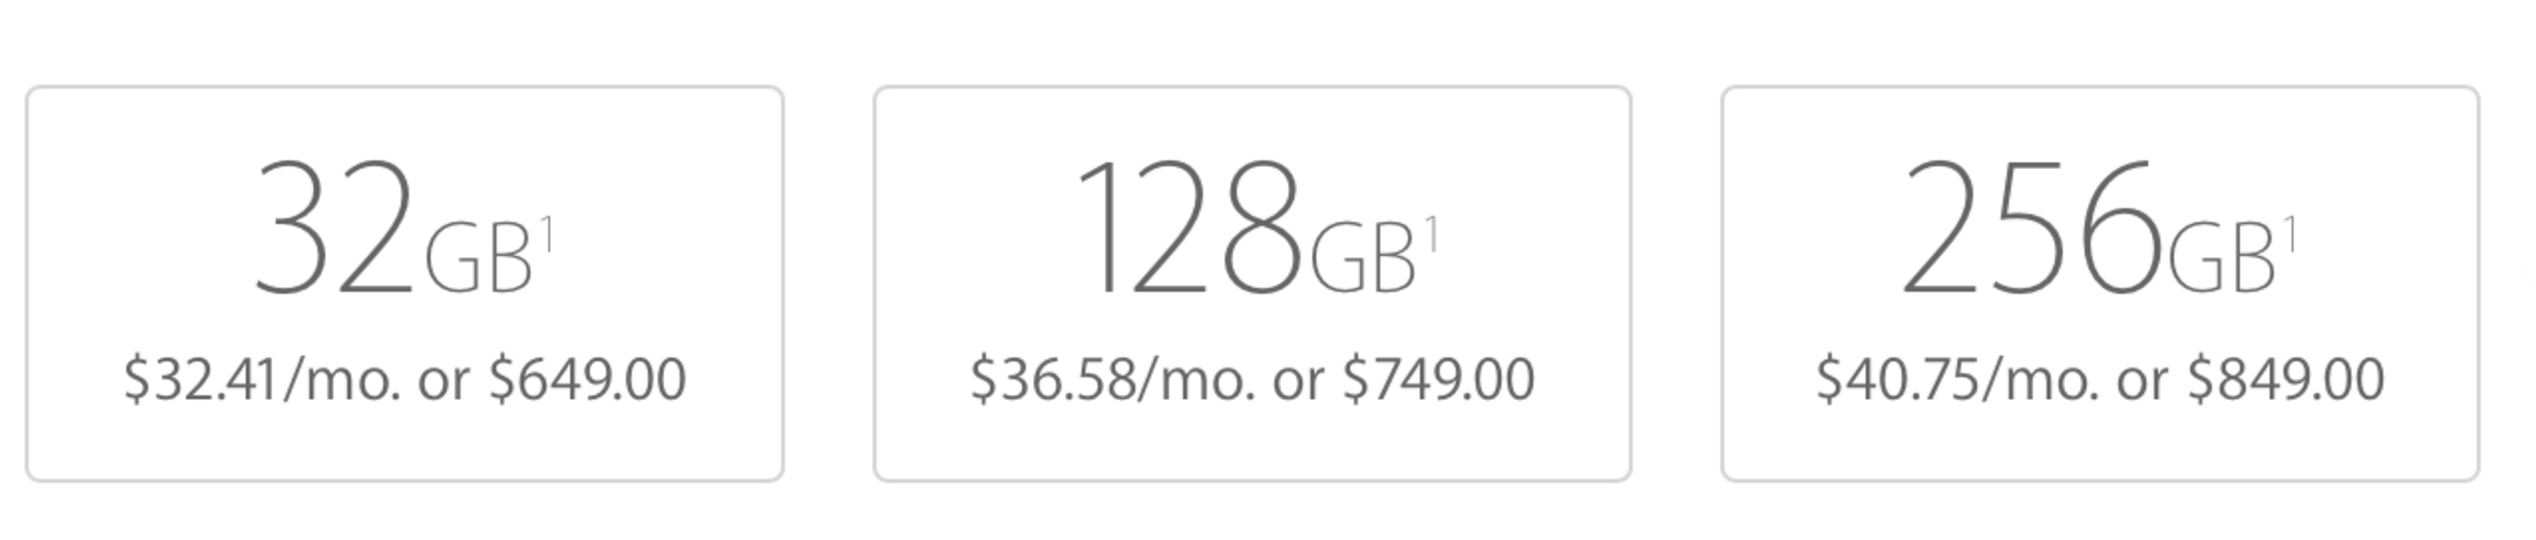 iphone-7-pricing